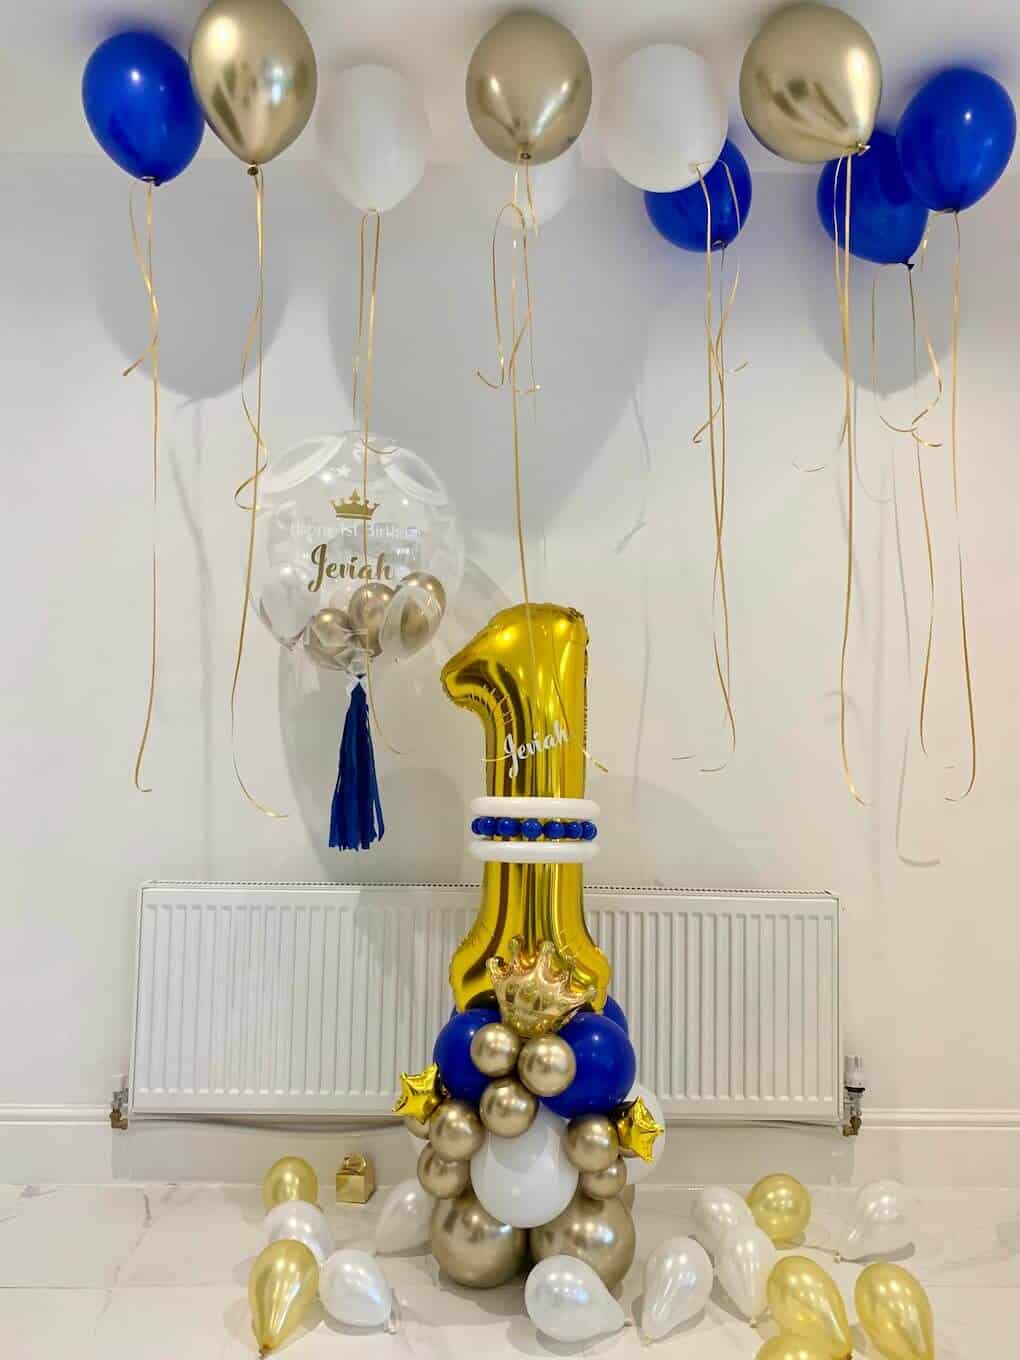 bubble-age-column-10-ceiling-ballons-floor-balloons